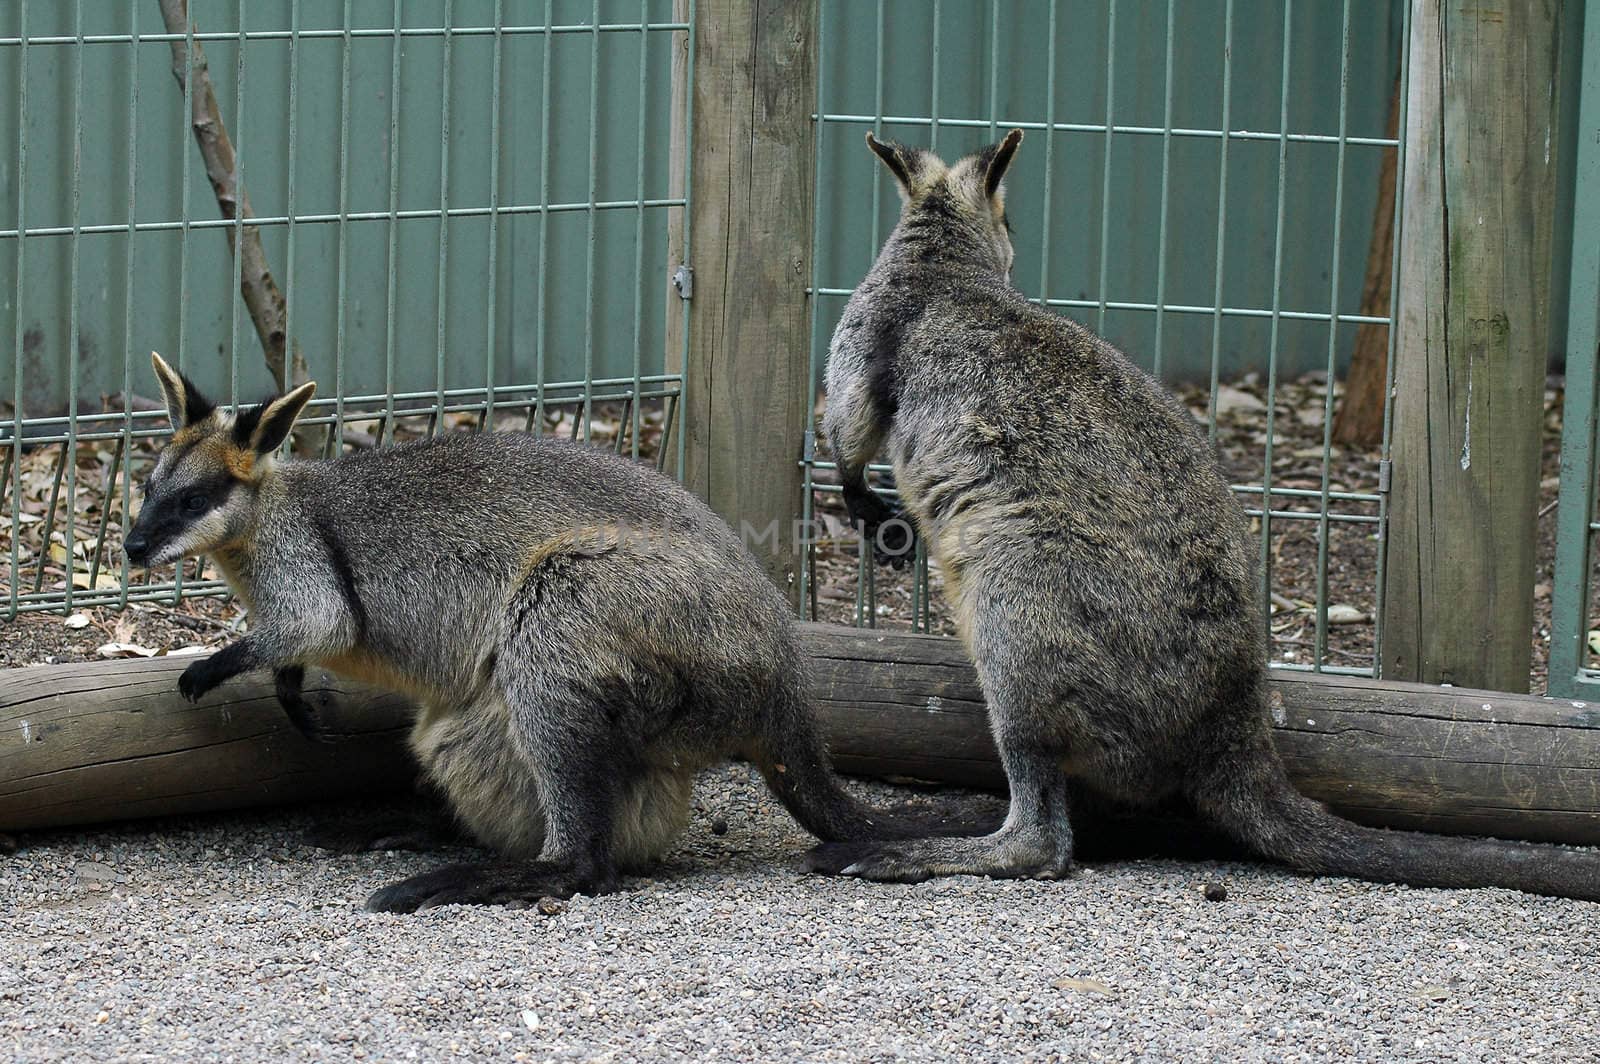 two grey kangaroos in zoo, photo taken in sydney